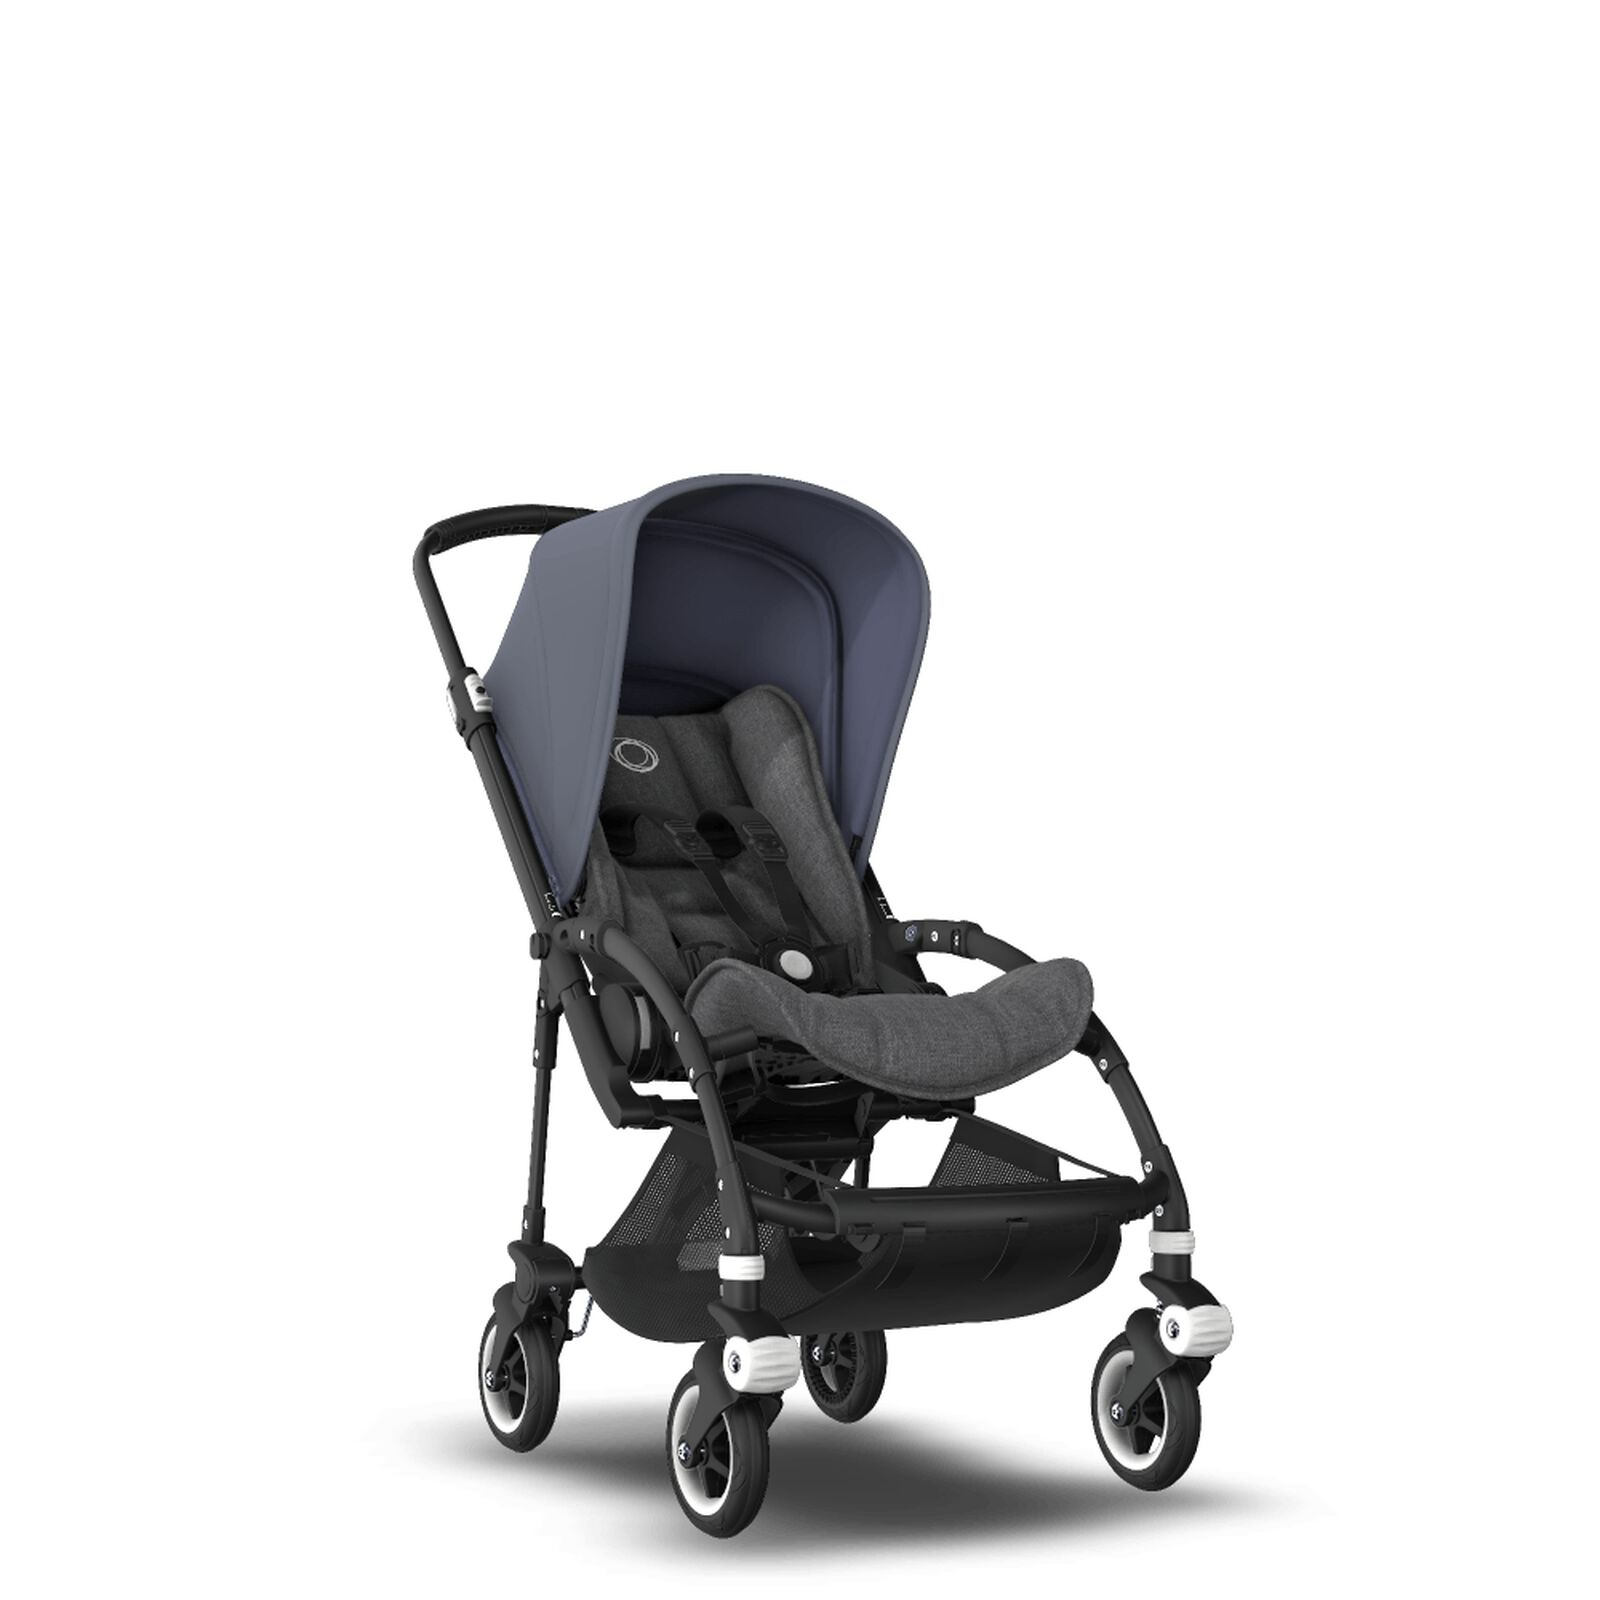 Bugaboo Bee 5 seat stroller steel blue sun canopy, grey melange fabrics, black base